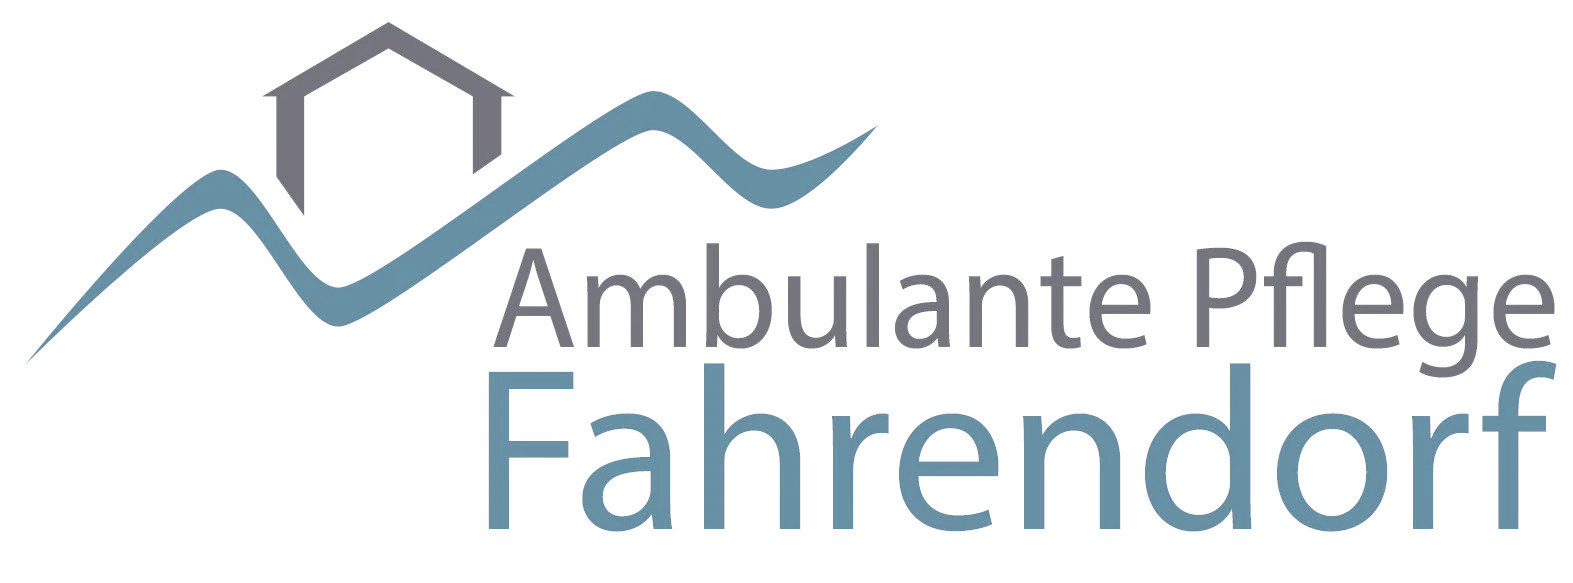 Logo Ambulante Pflege Fahrendorf